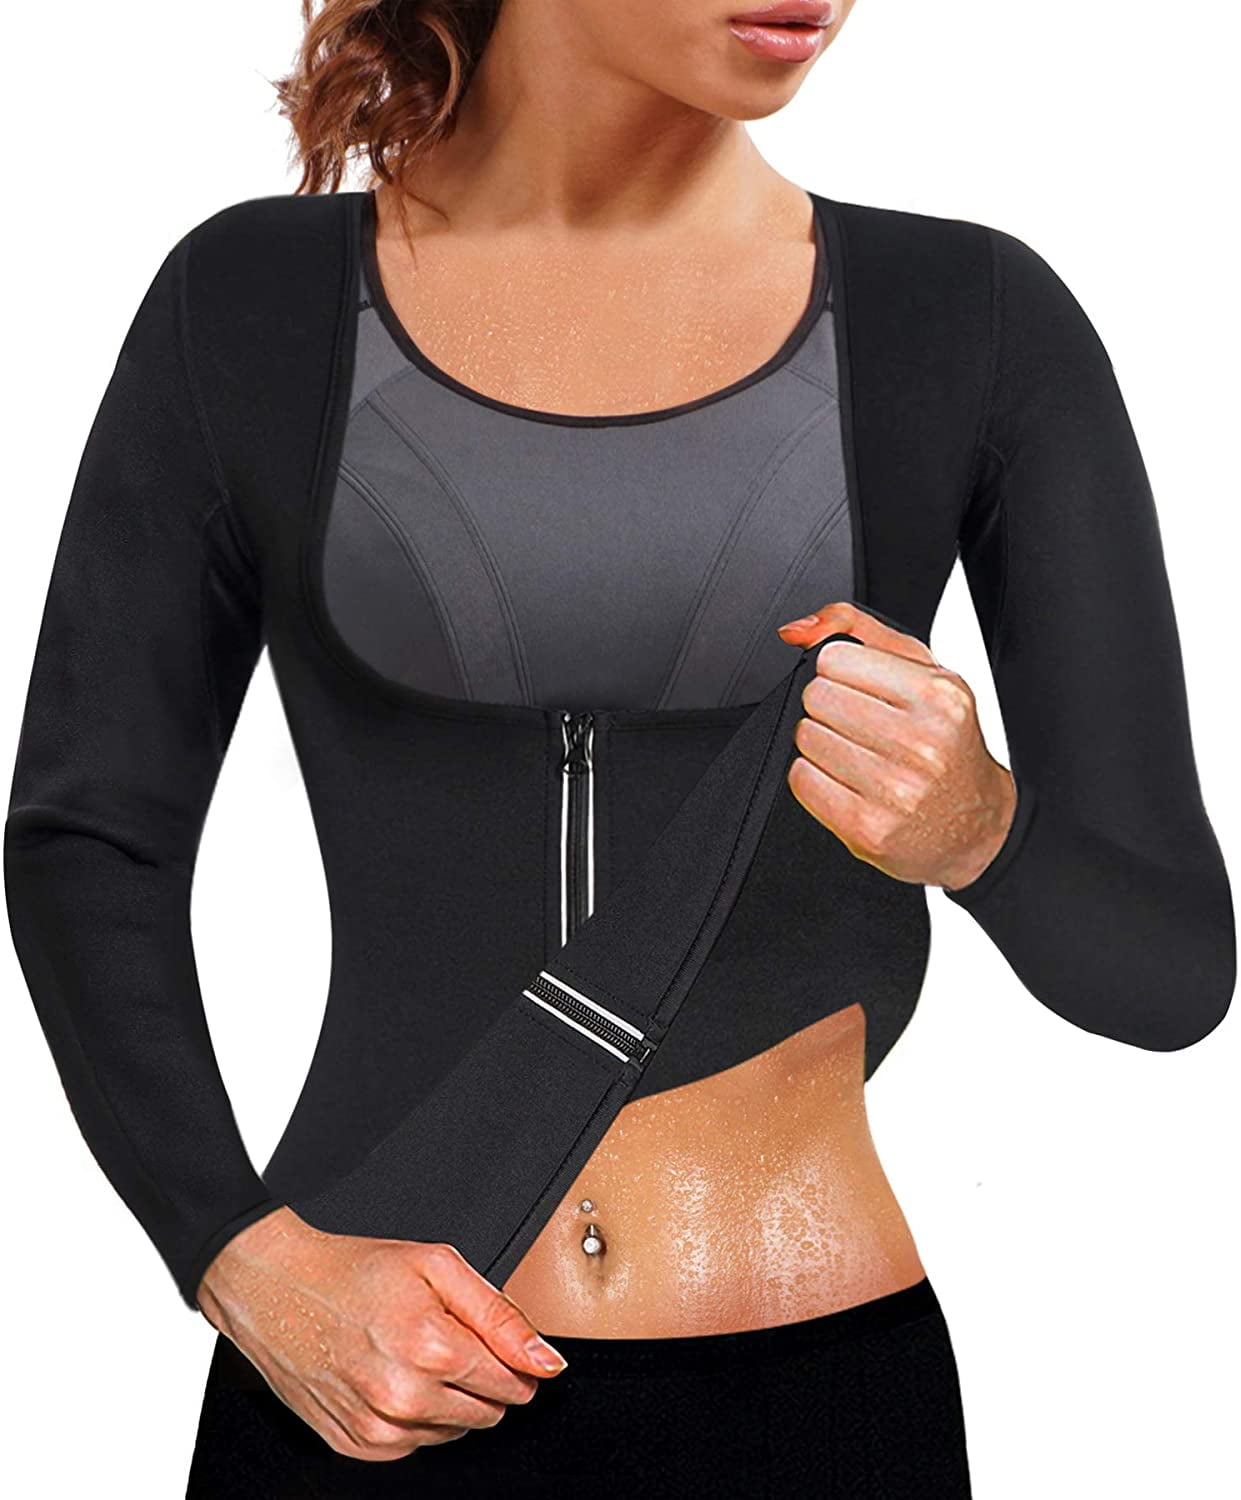 Gotoly Women Waist Trainer Hot Neoprene Shirt Sauna Suit Sweat Body Shaper Jacket Top Zipper Long Sleeve 